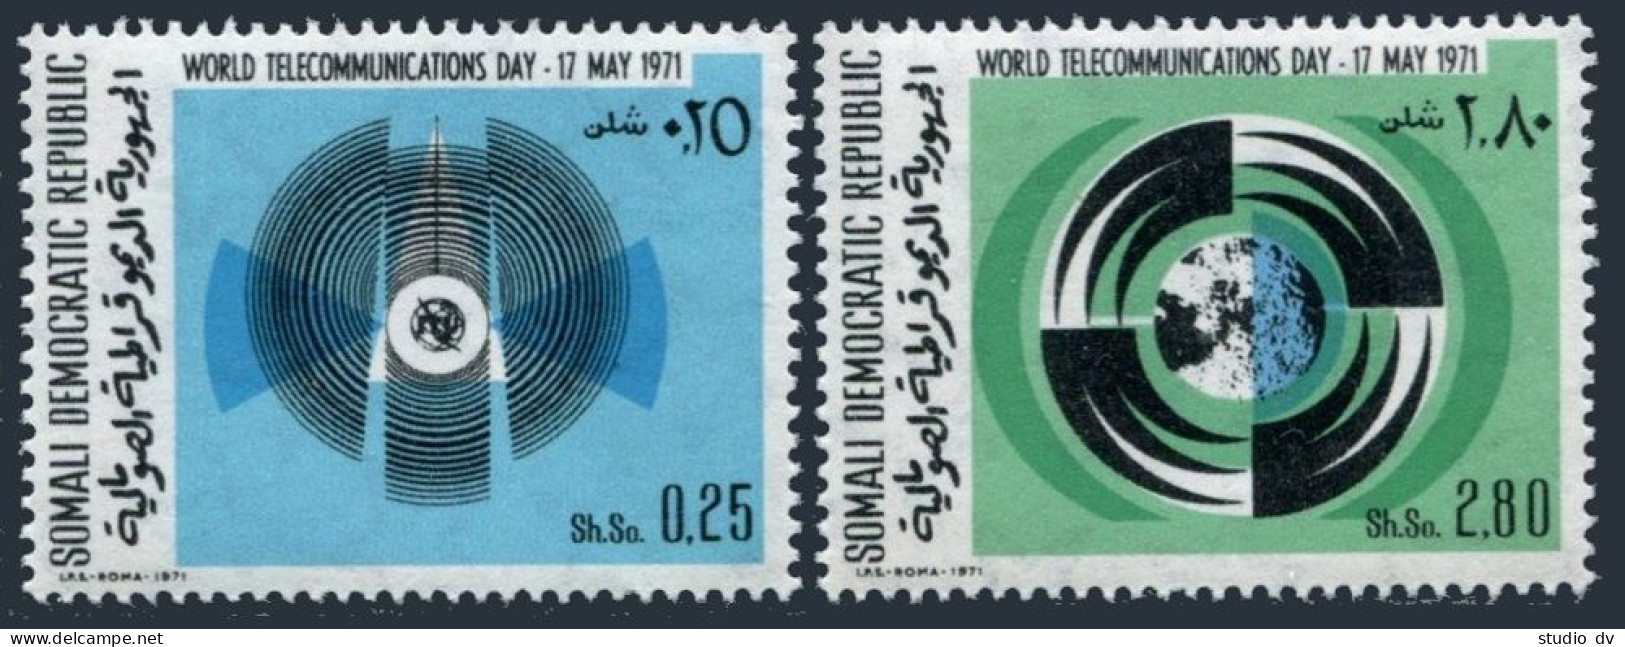 Somalia 370-371, MNH. Michel 172-173. World Telecommunications Day, 1971. Waves. - Somalia (1960-...)